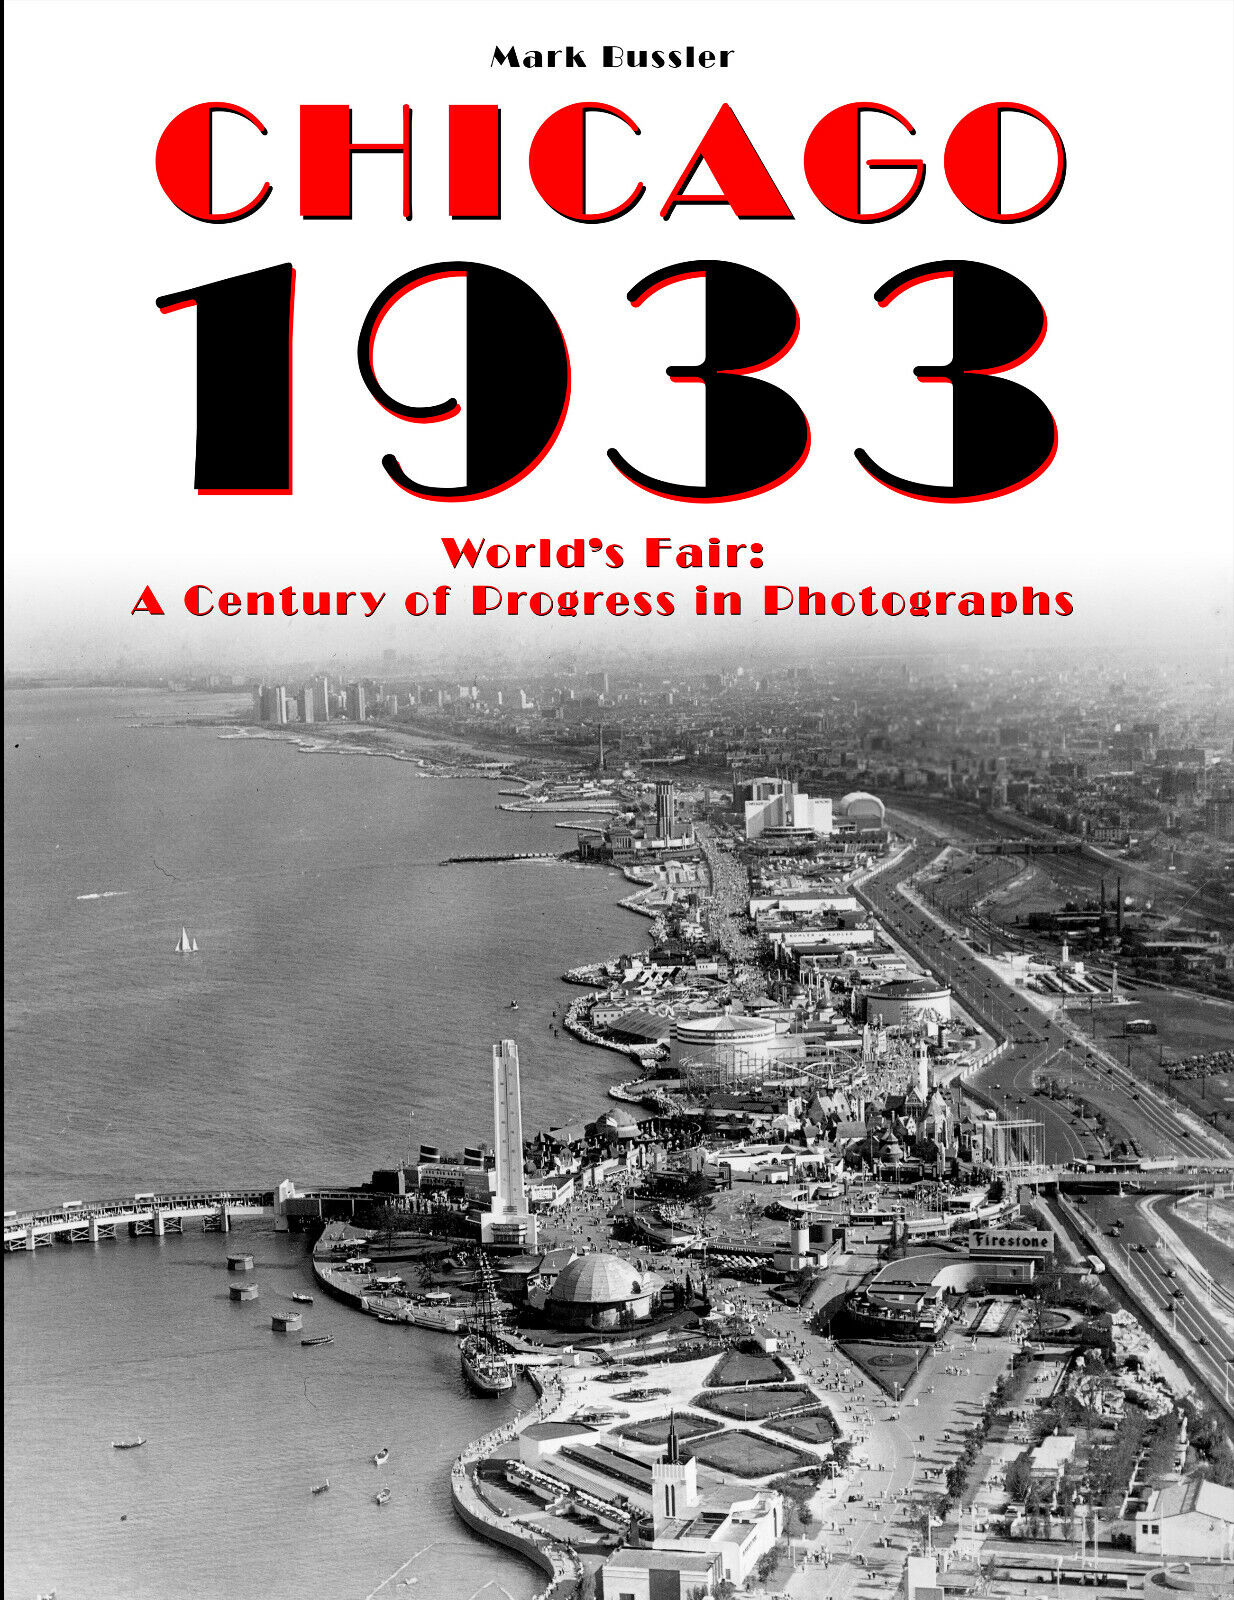 *BRAND NEW* Chicago 1933 World's Fair: A Century of Progress in Photographs book